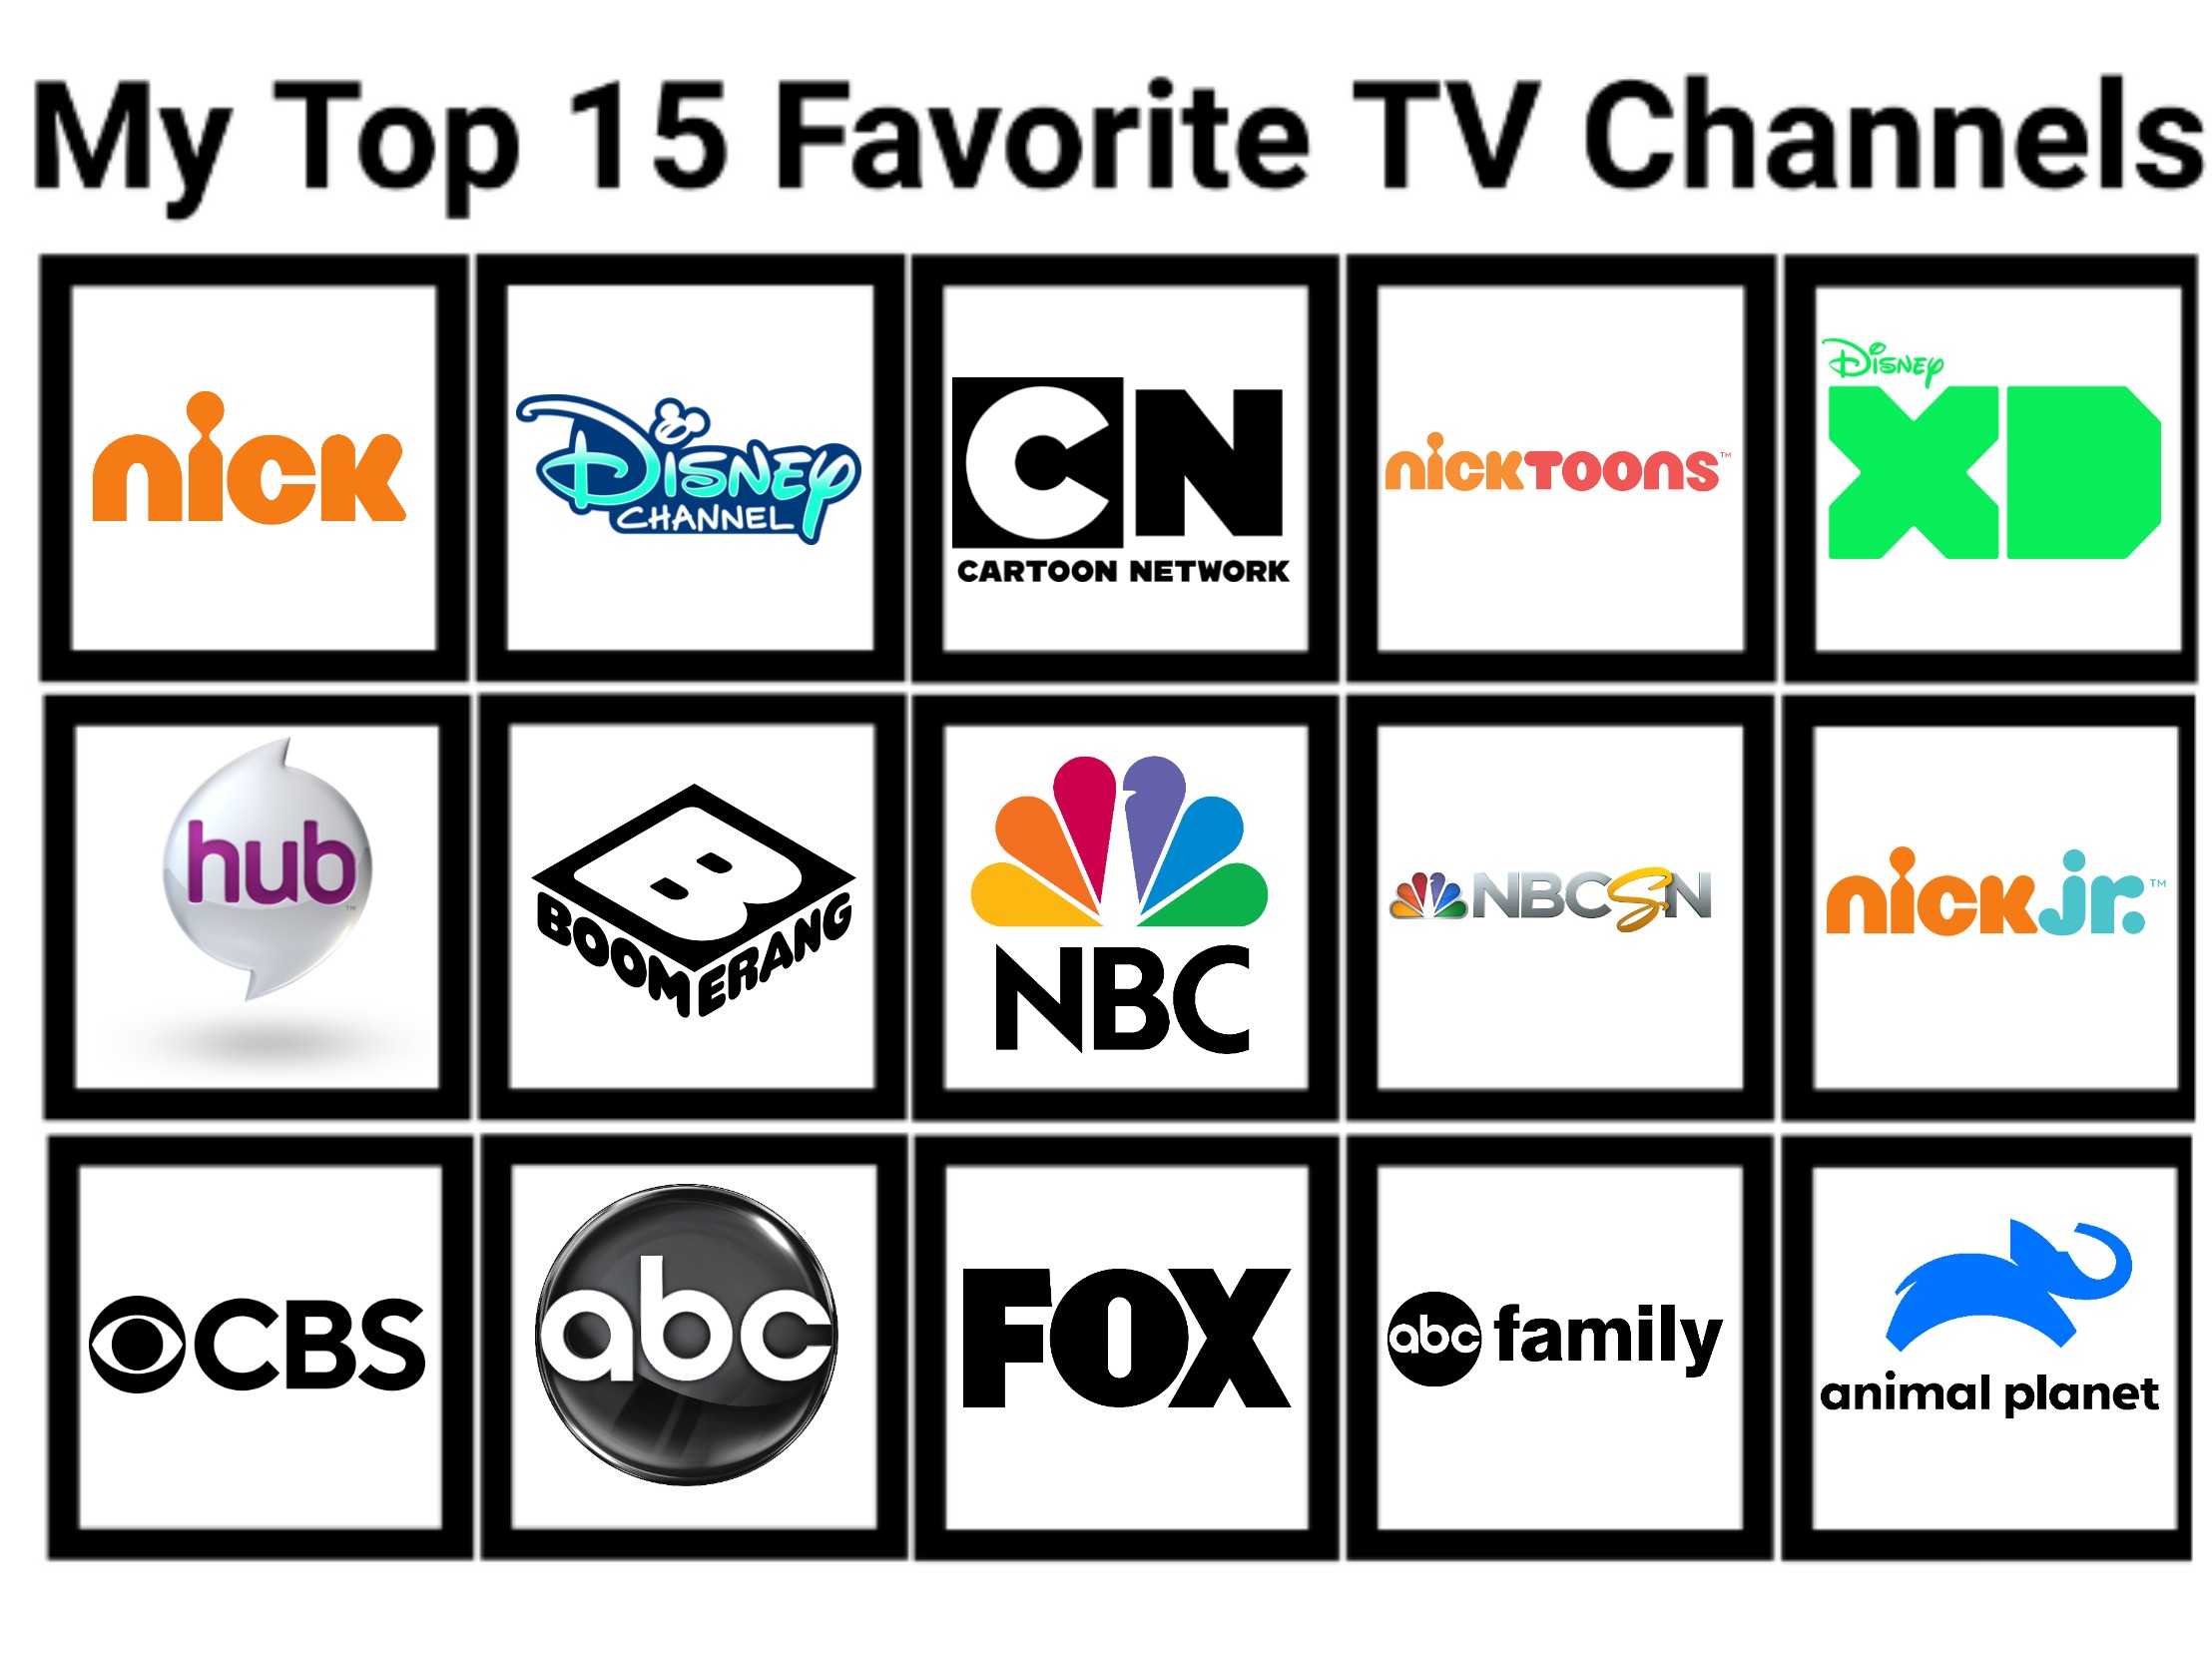 My Top 15 Favorite TV Channels by PatrickSiegler1999 on DeviantArt